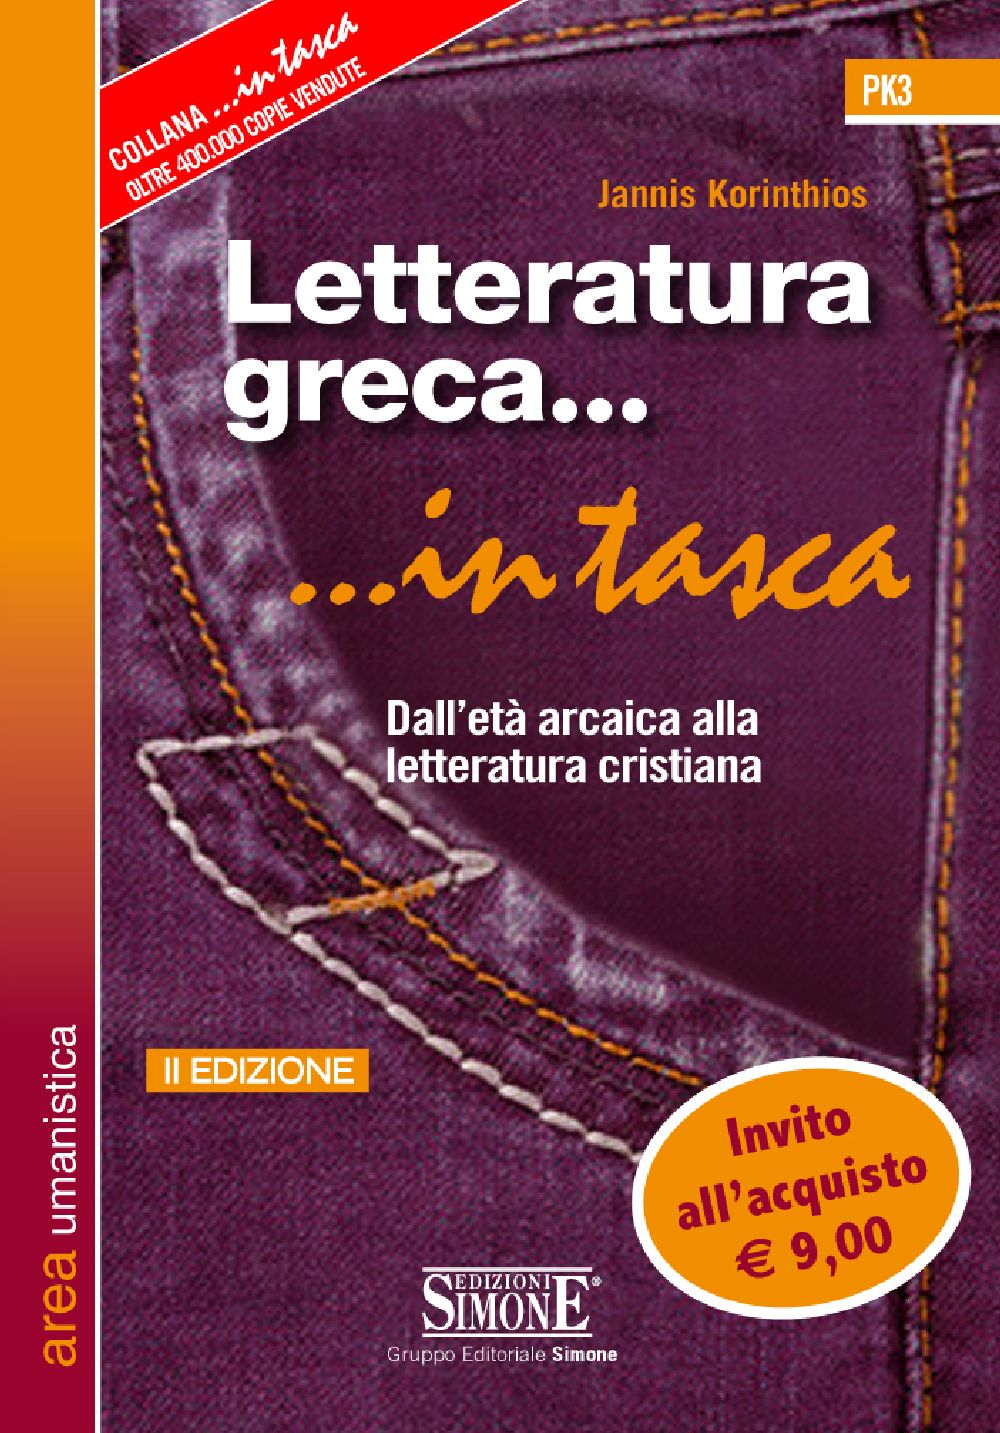 Letteratura greca... in tasca - PK3